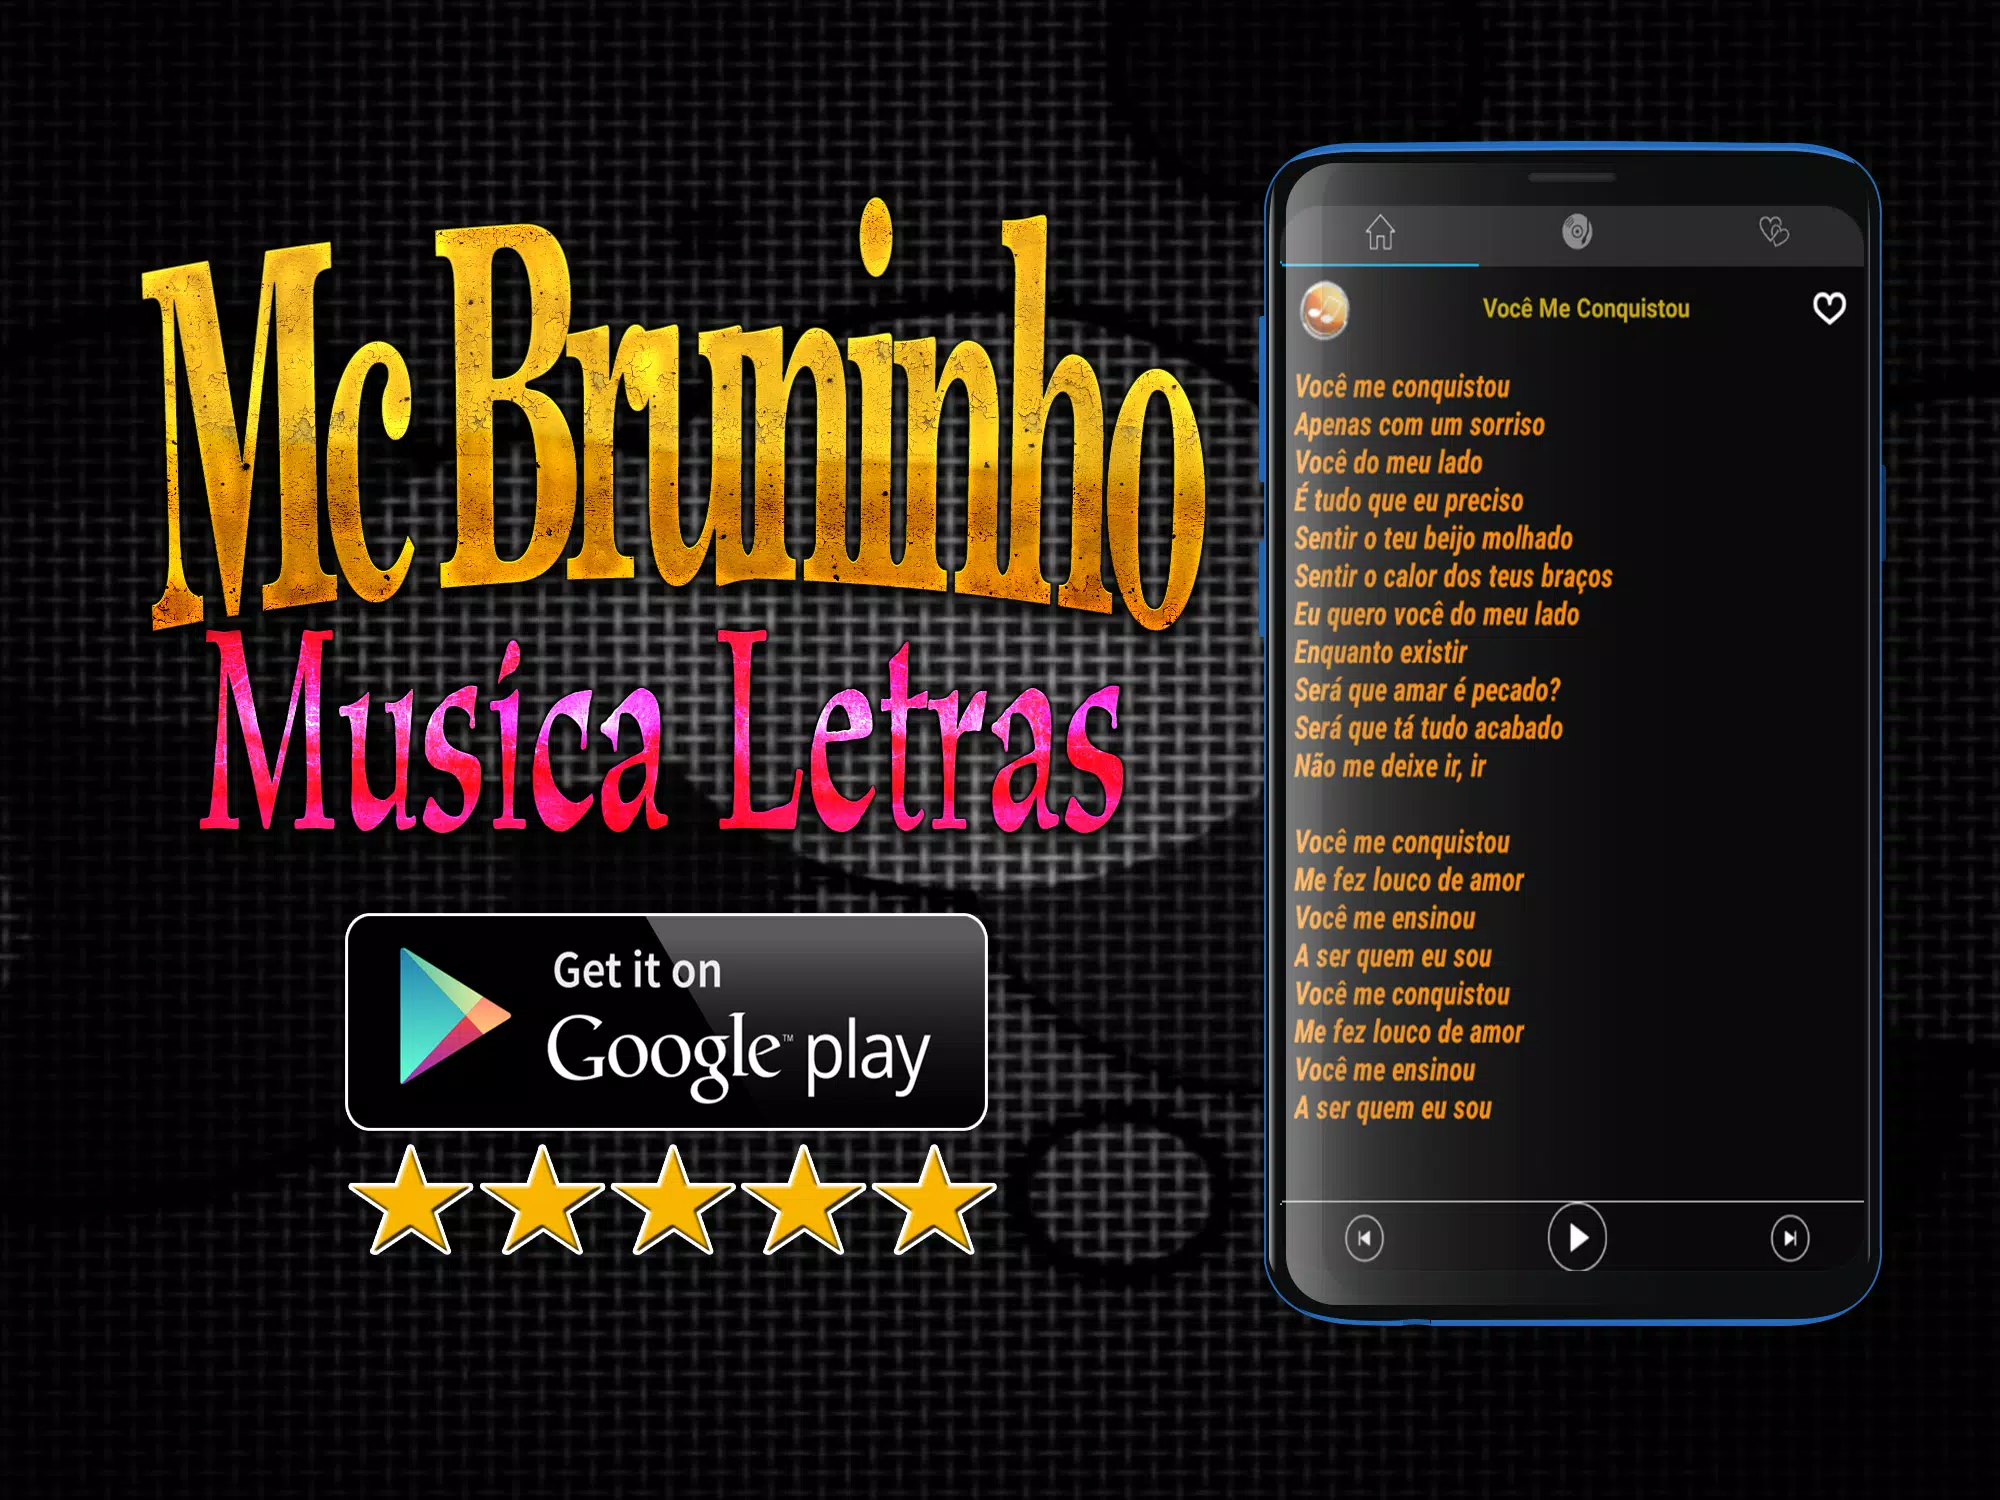 MC BRUNINHO - Jogo Do Amor Mp3 Apk Download for Android- Latest